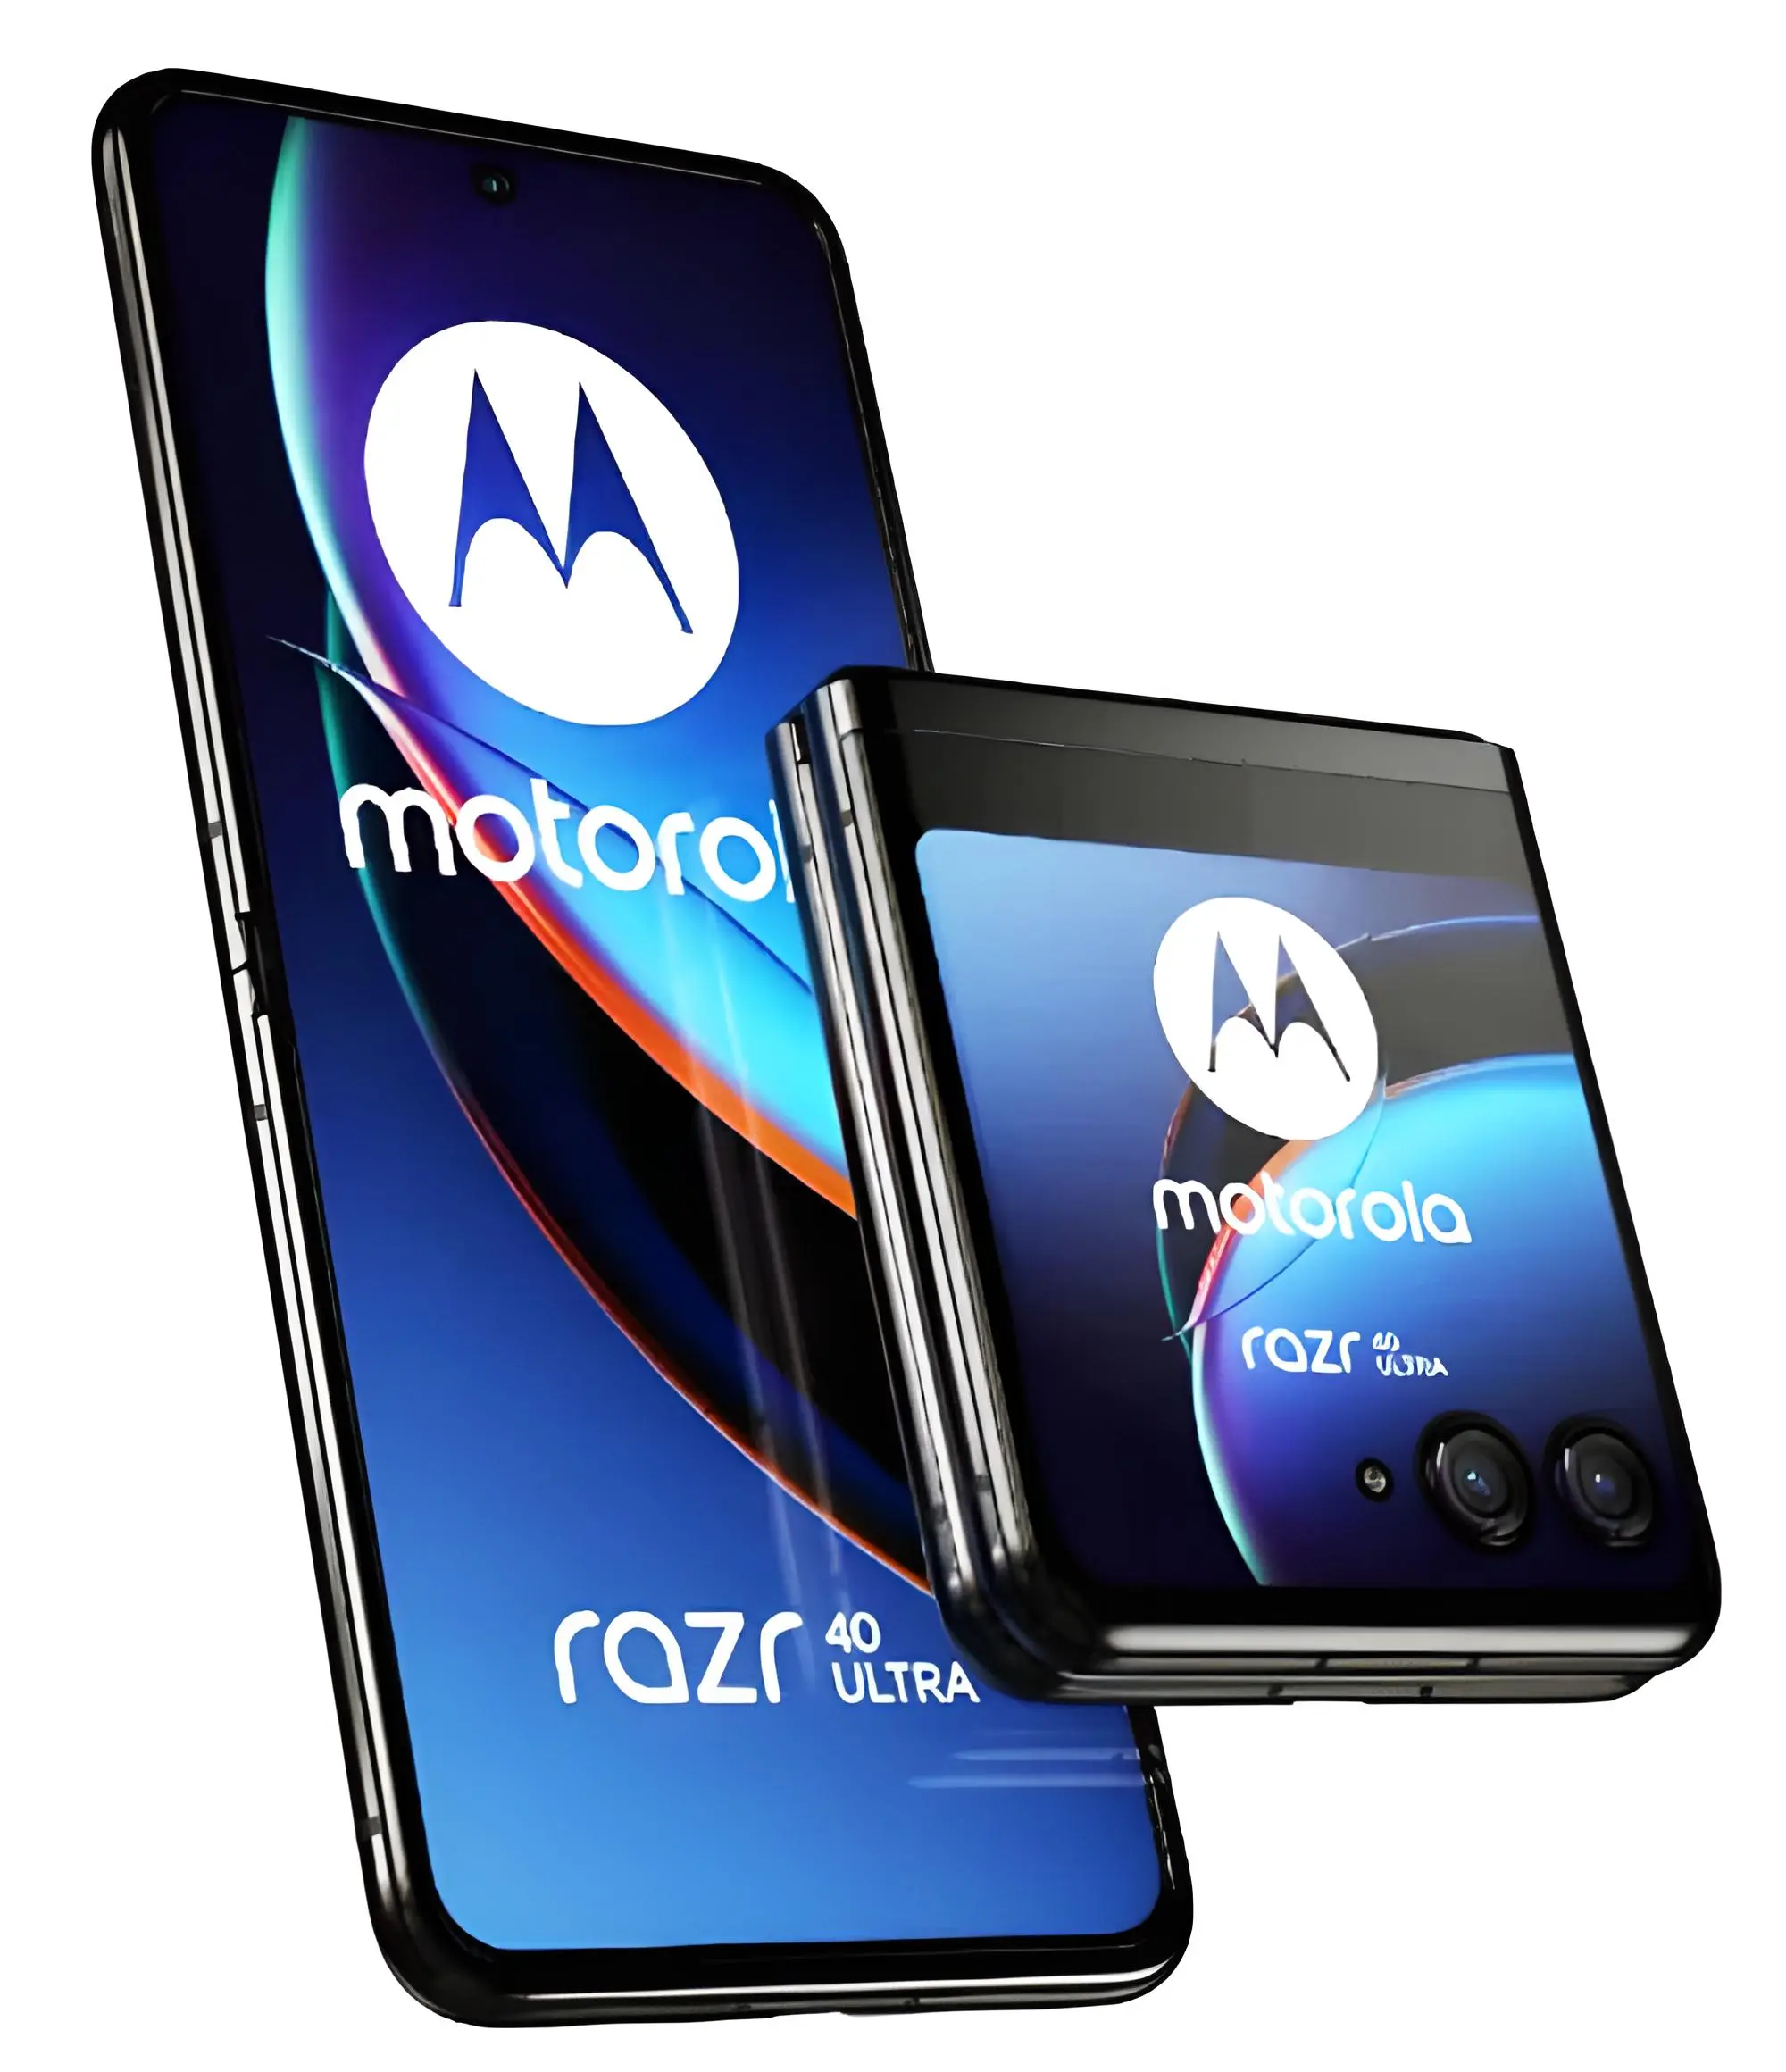 Motorola-Rarz-40-edge